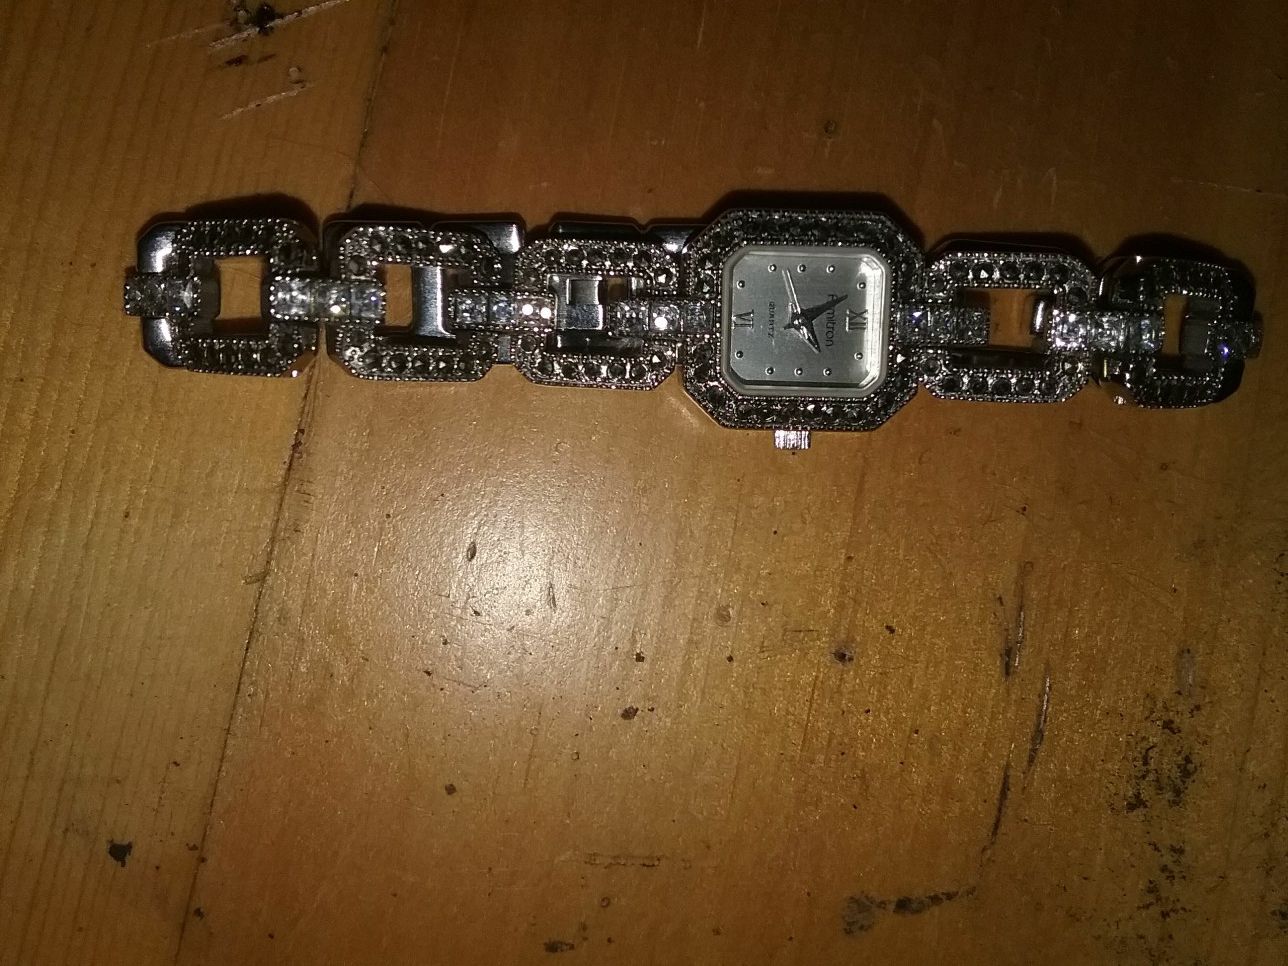 Armatran lady's watch